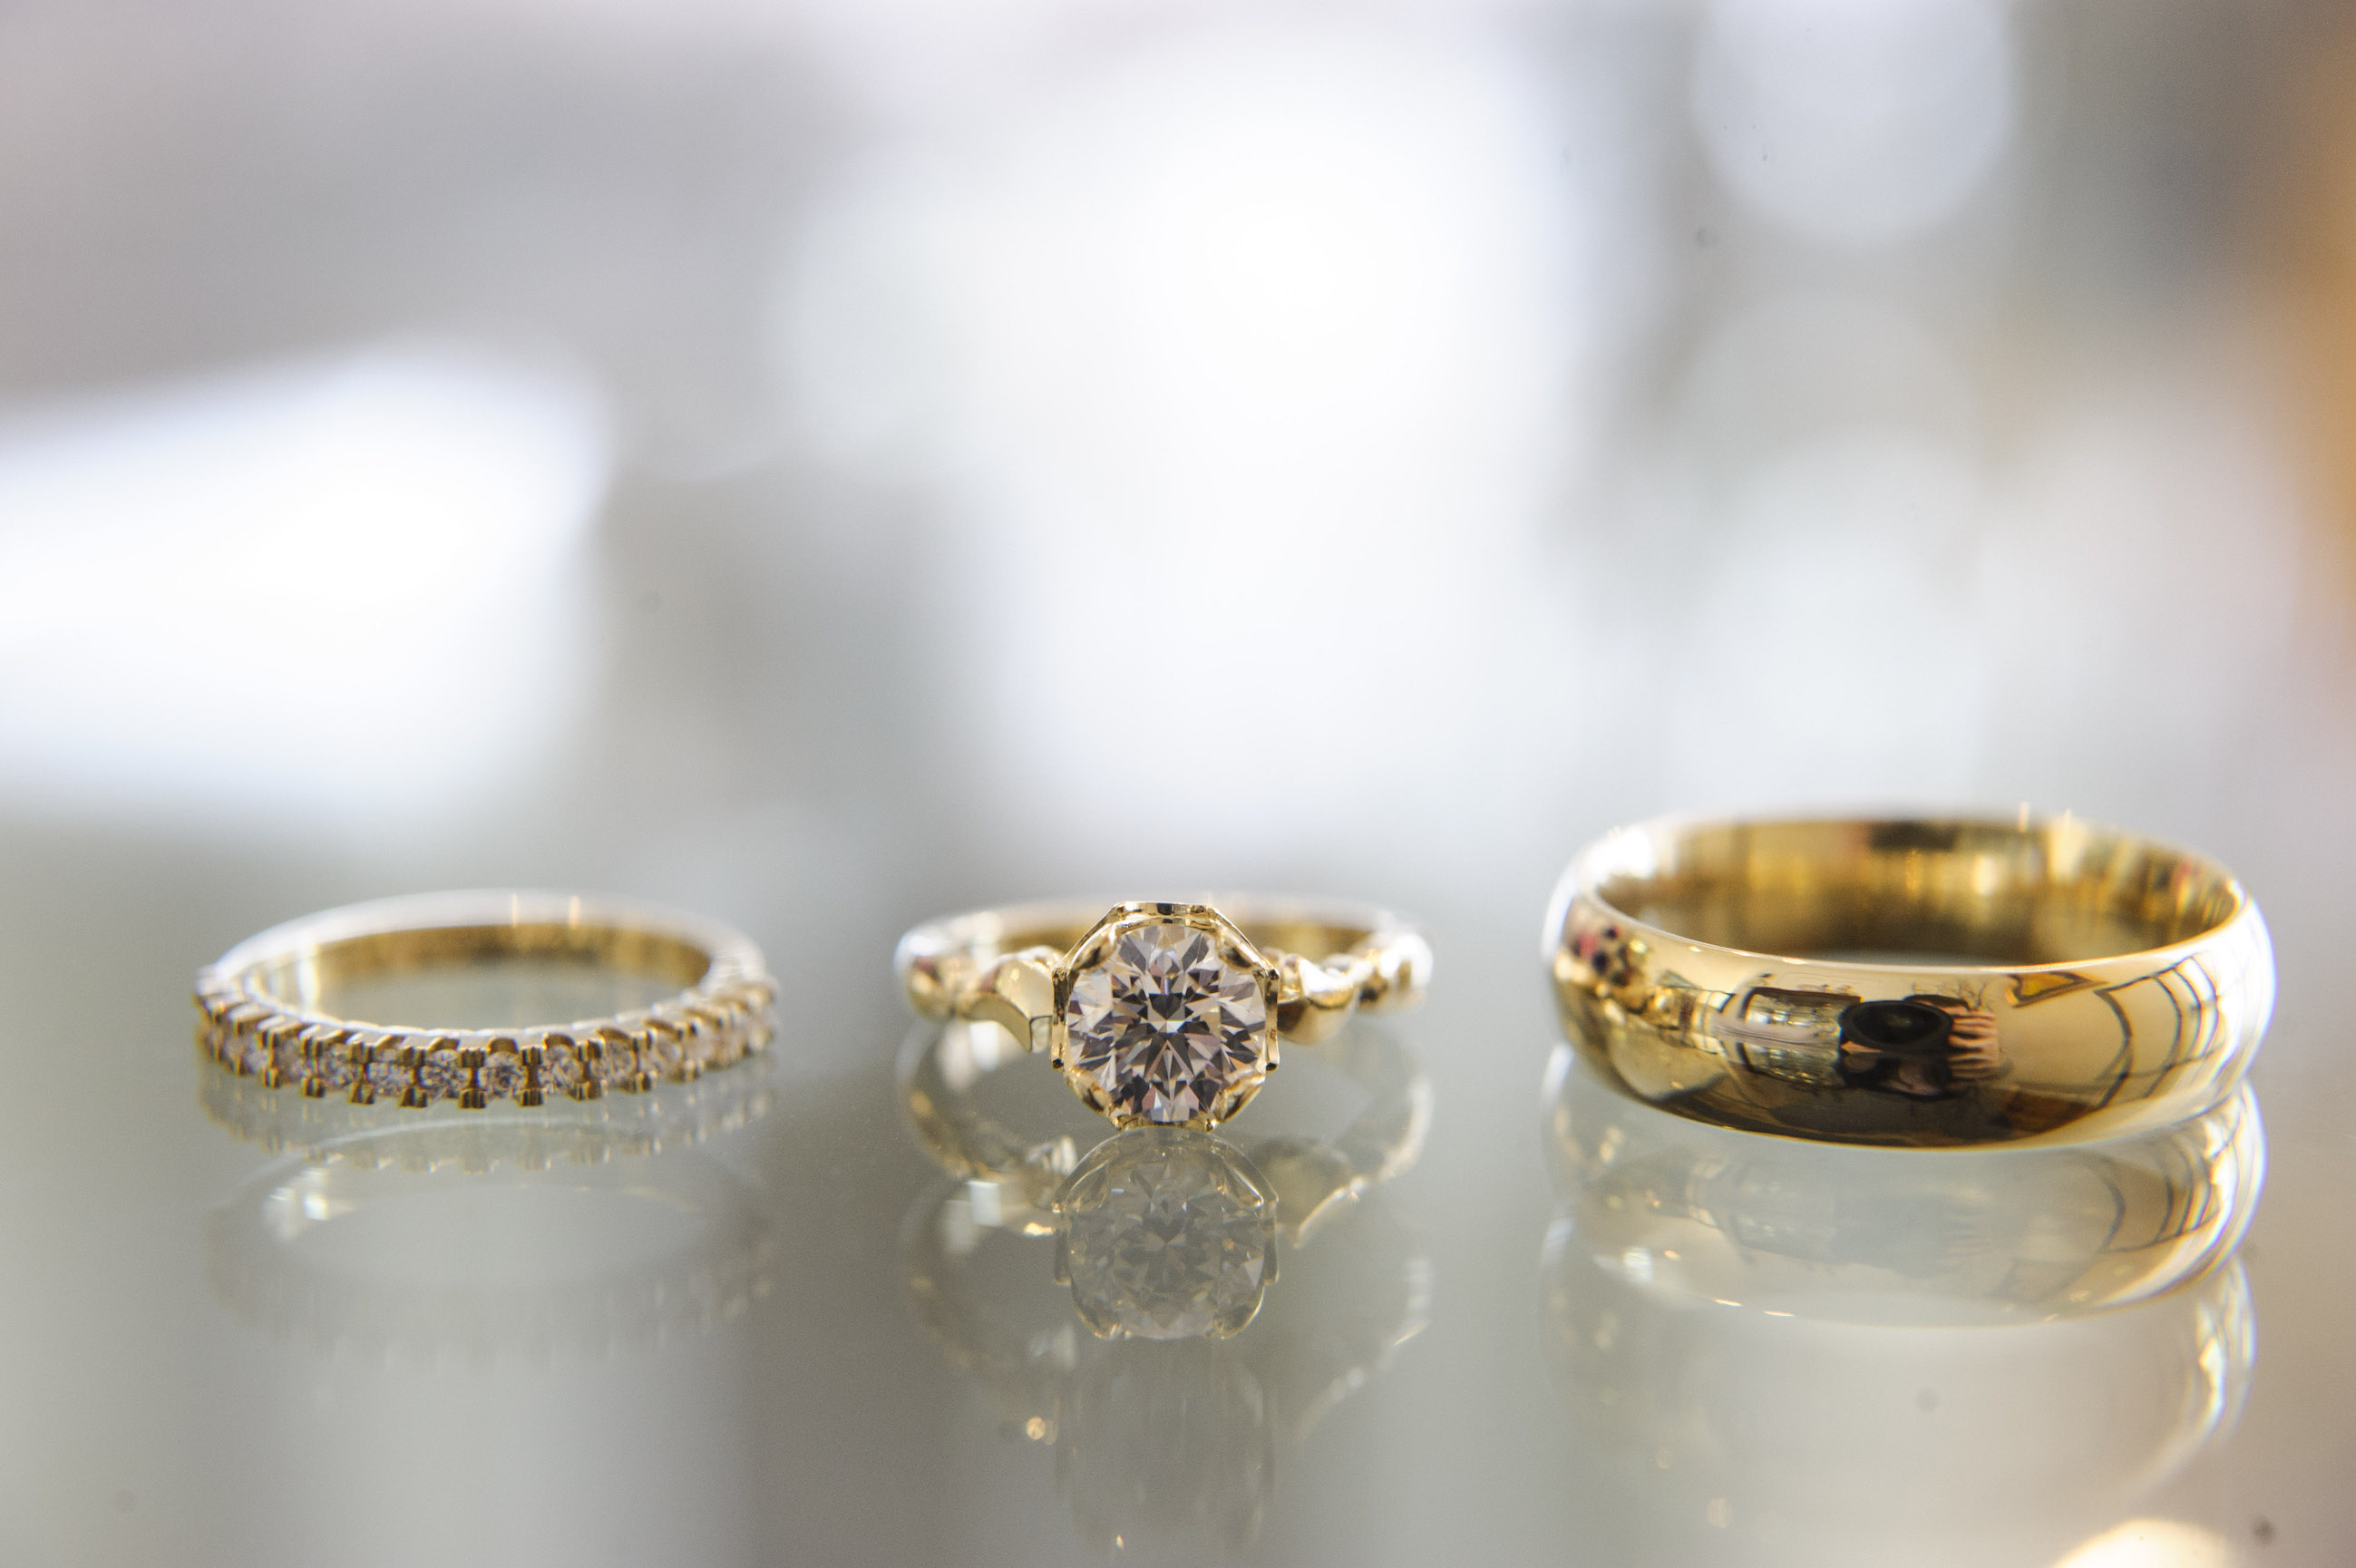 Fairytale bridal rings